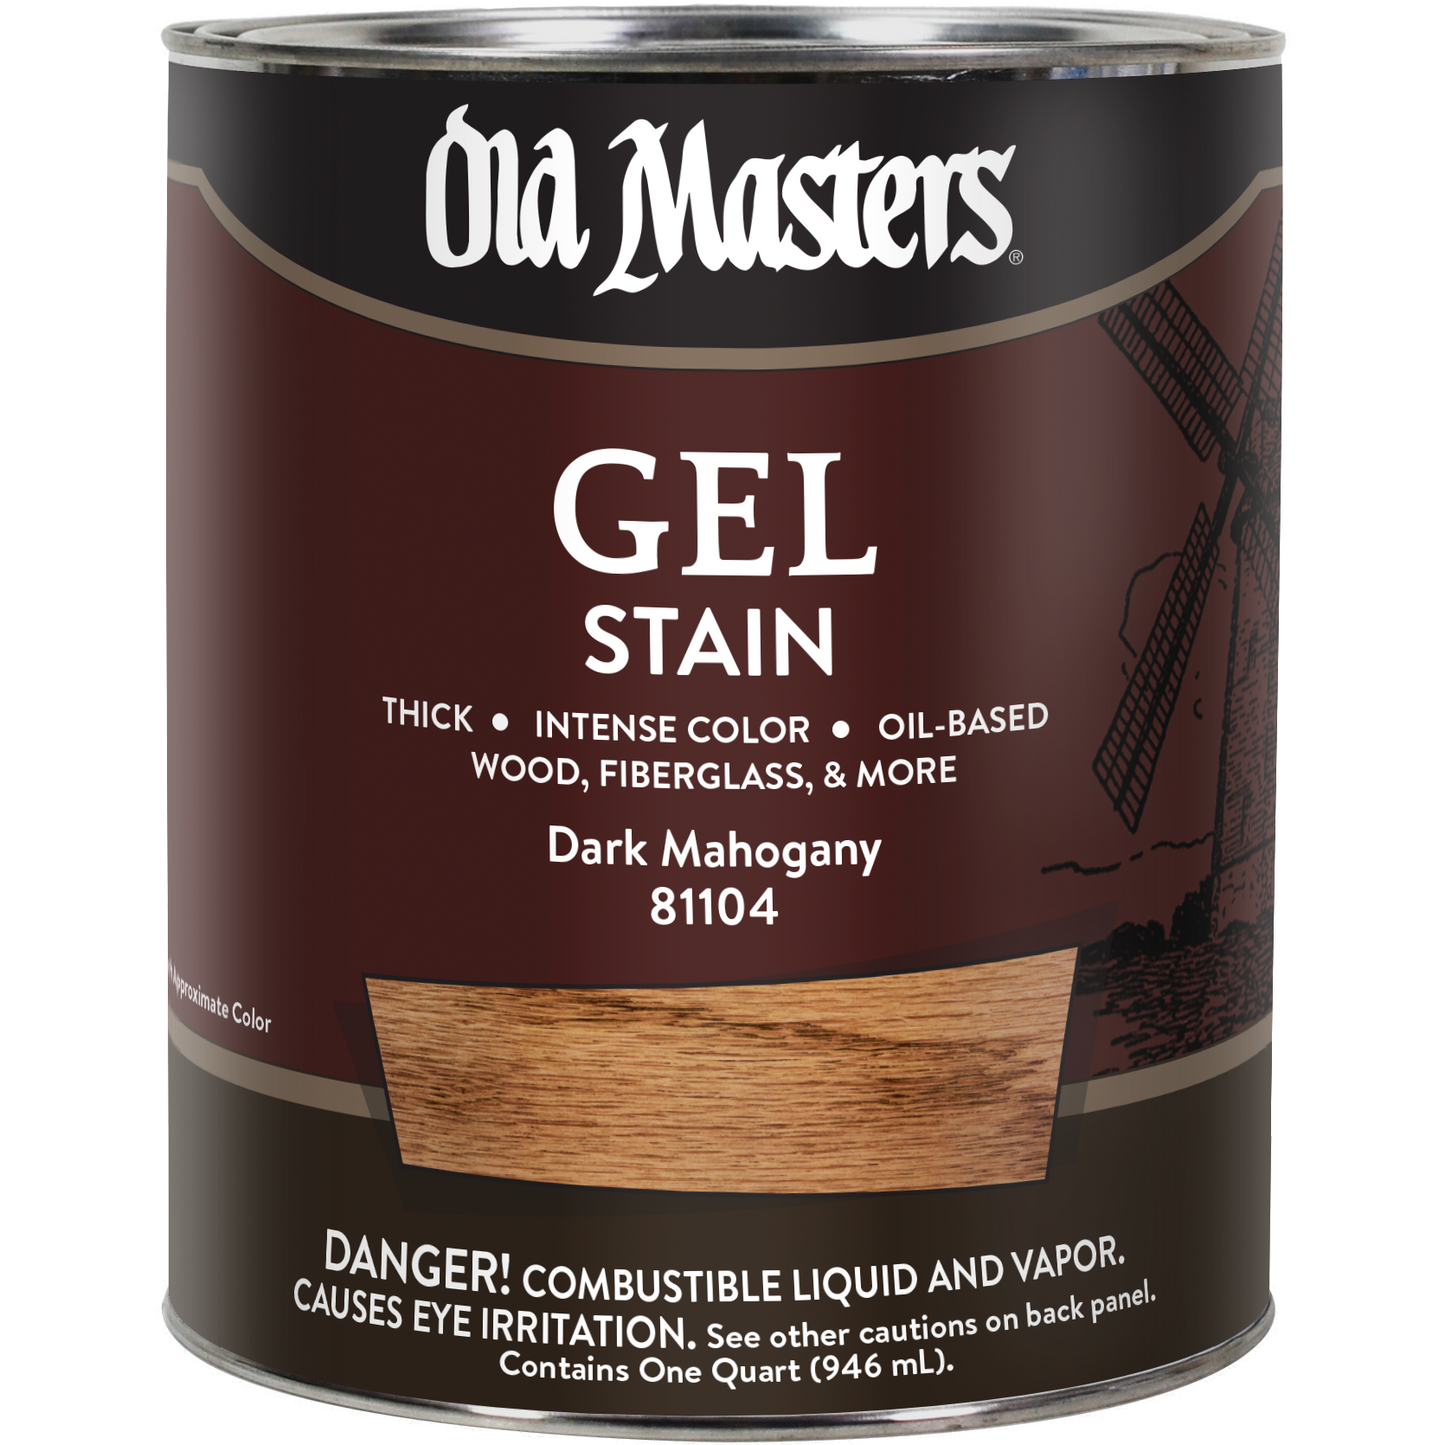 Old Masters Gel Stain - Dark Mahogany